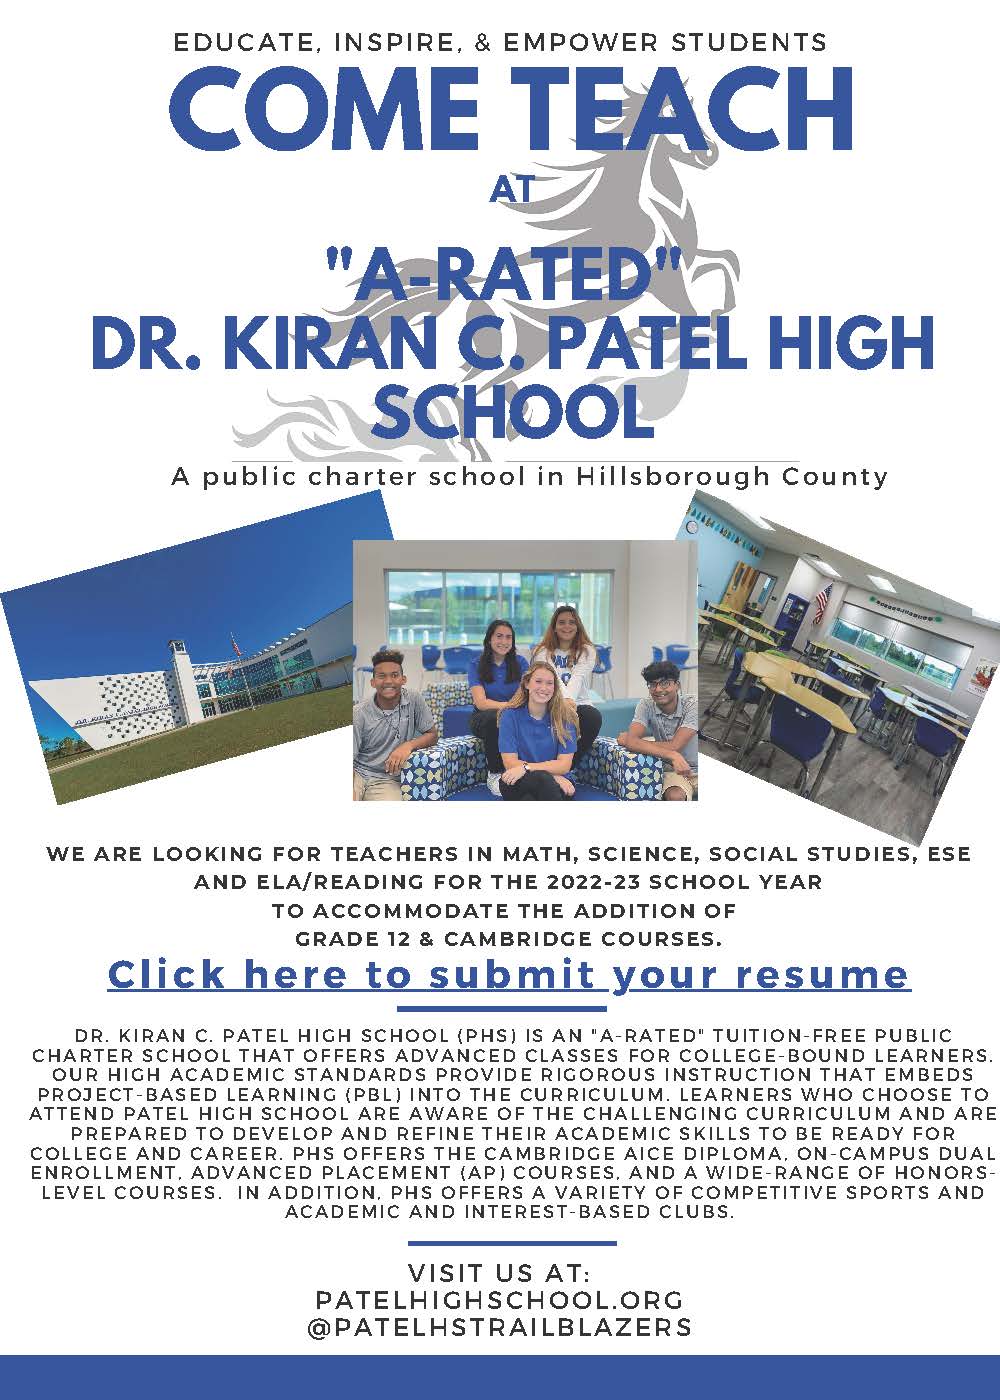 Teacher Recruitment Flyer - Come Teach at "A Rated Dr. Kiran C. Patel High School"